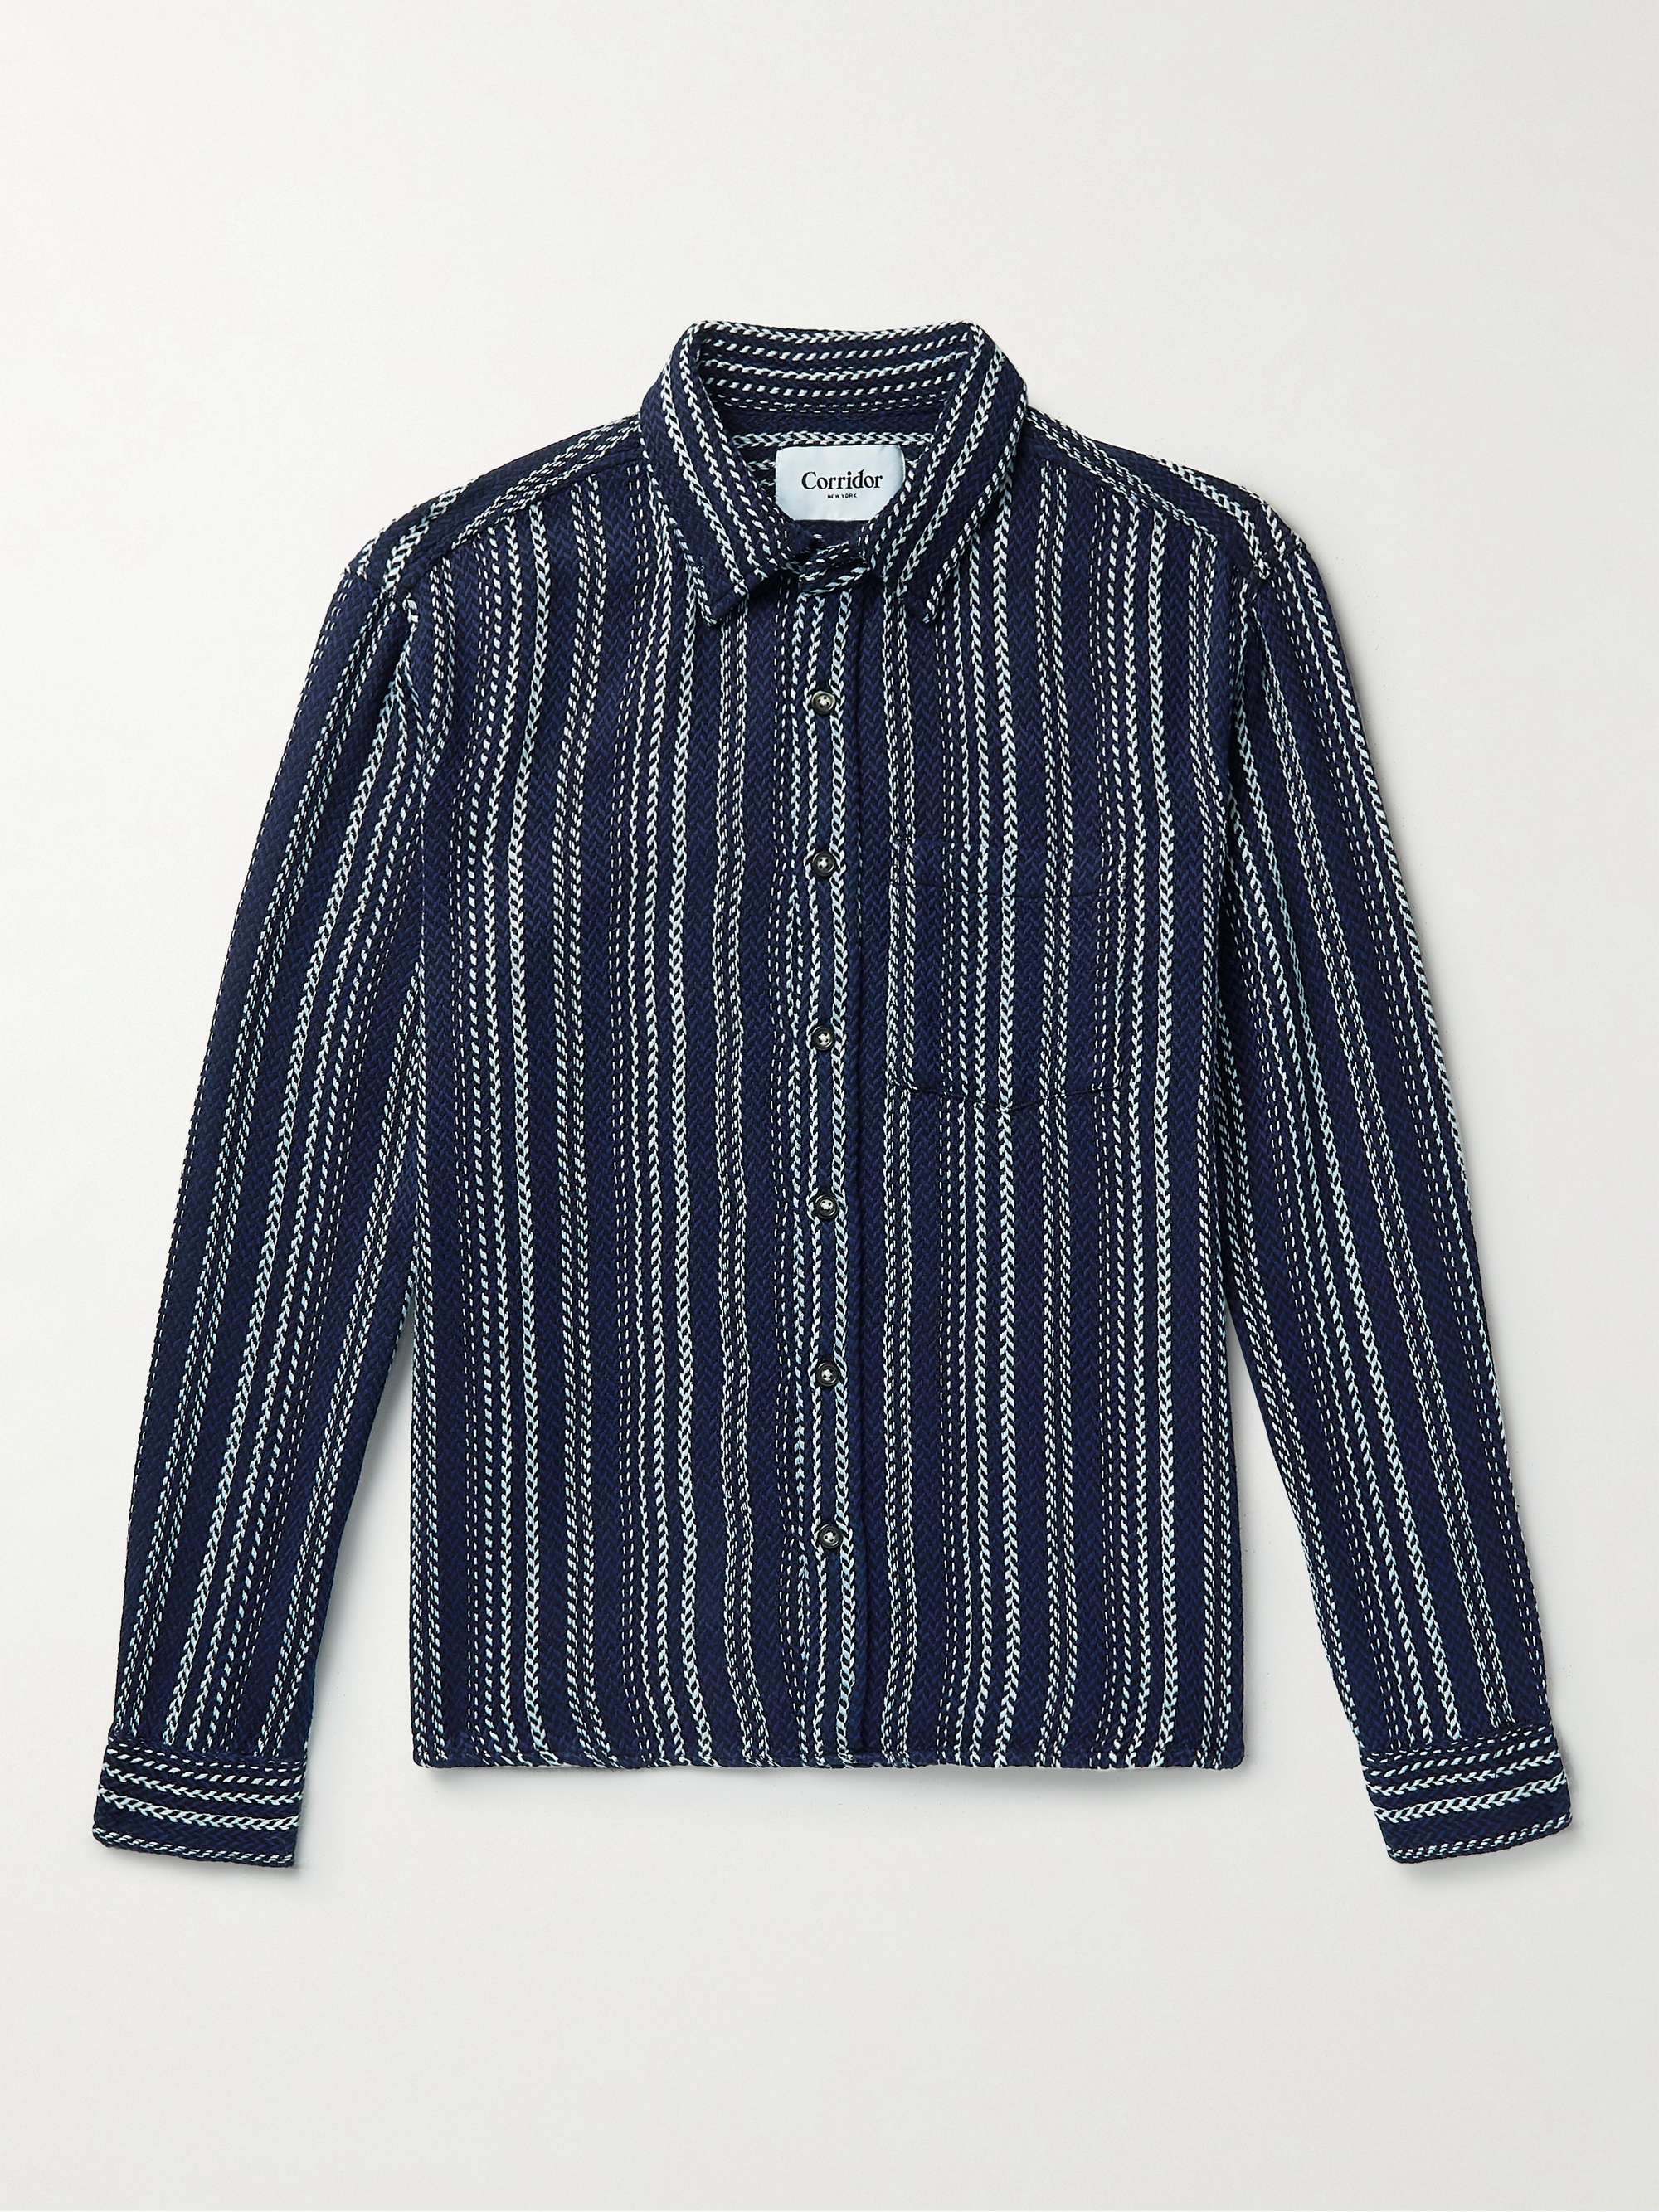 Navy Sky Captain Striped Cotton-Jacquard Shirt | CORRIDOR | MR PORTER